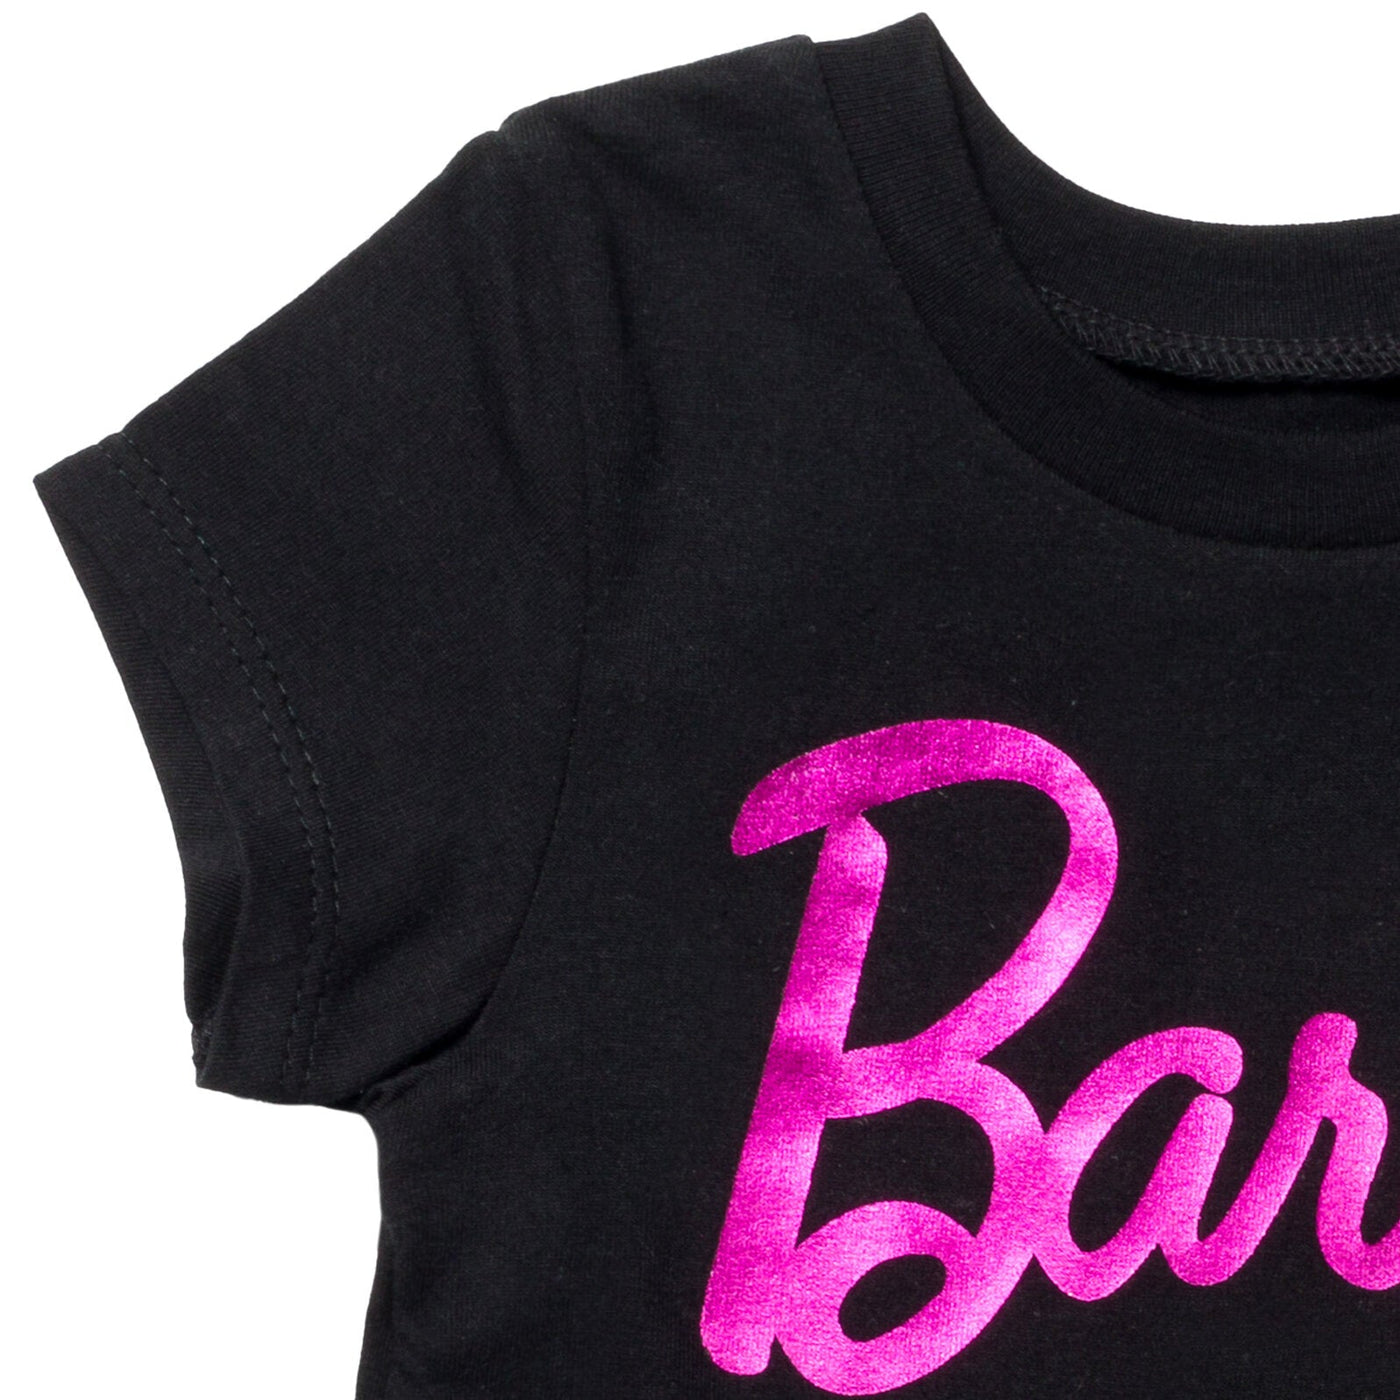 Barbie T-Shirt - imagikids